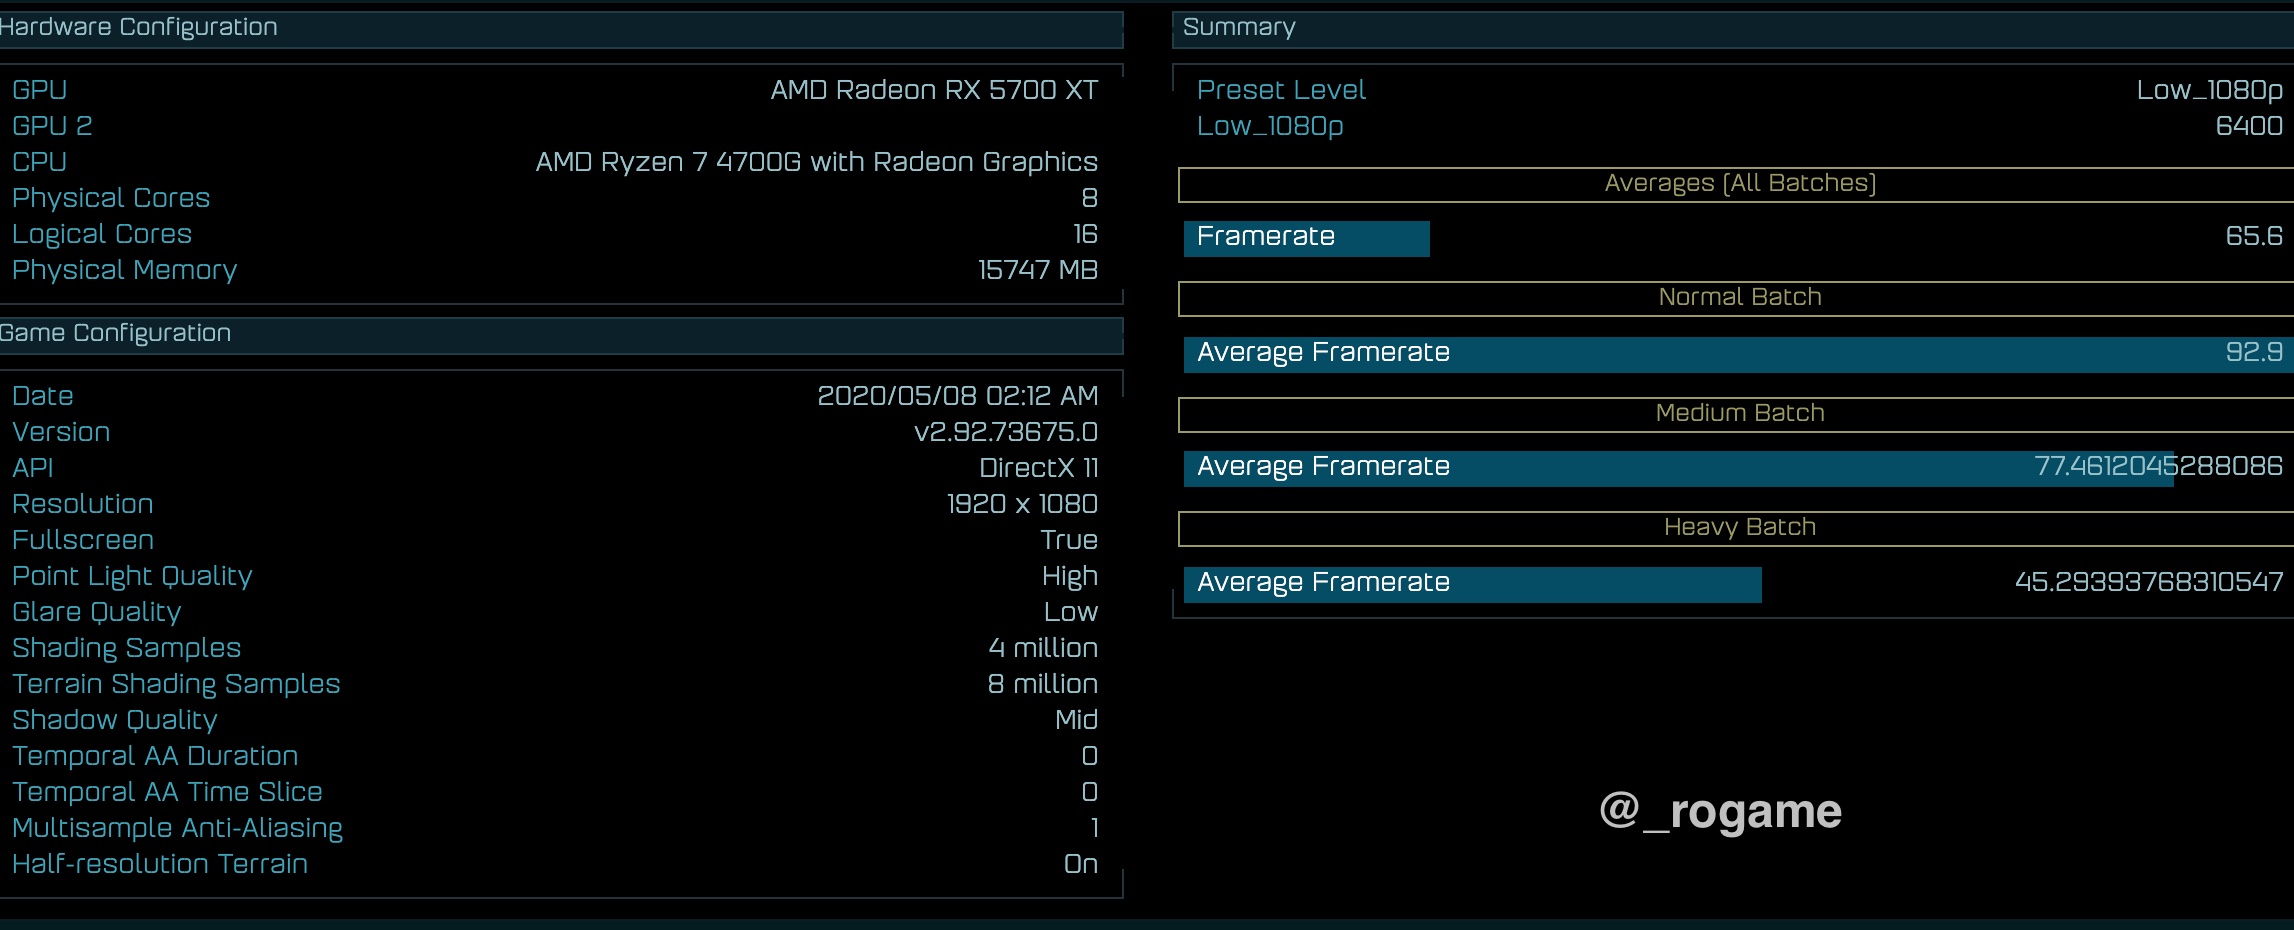 amd ryzen 7 4700g renoir 8 core desktop cpu พบข้อมูลซีพียู AMD Ryzen 7 4700G ในรหัส Renoir สถาปัตย์ Zen 2 และการ์ดจอ Vega APUs ขนาด 7nm 